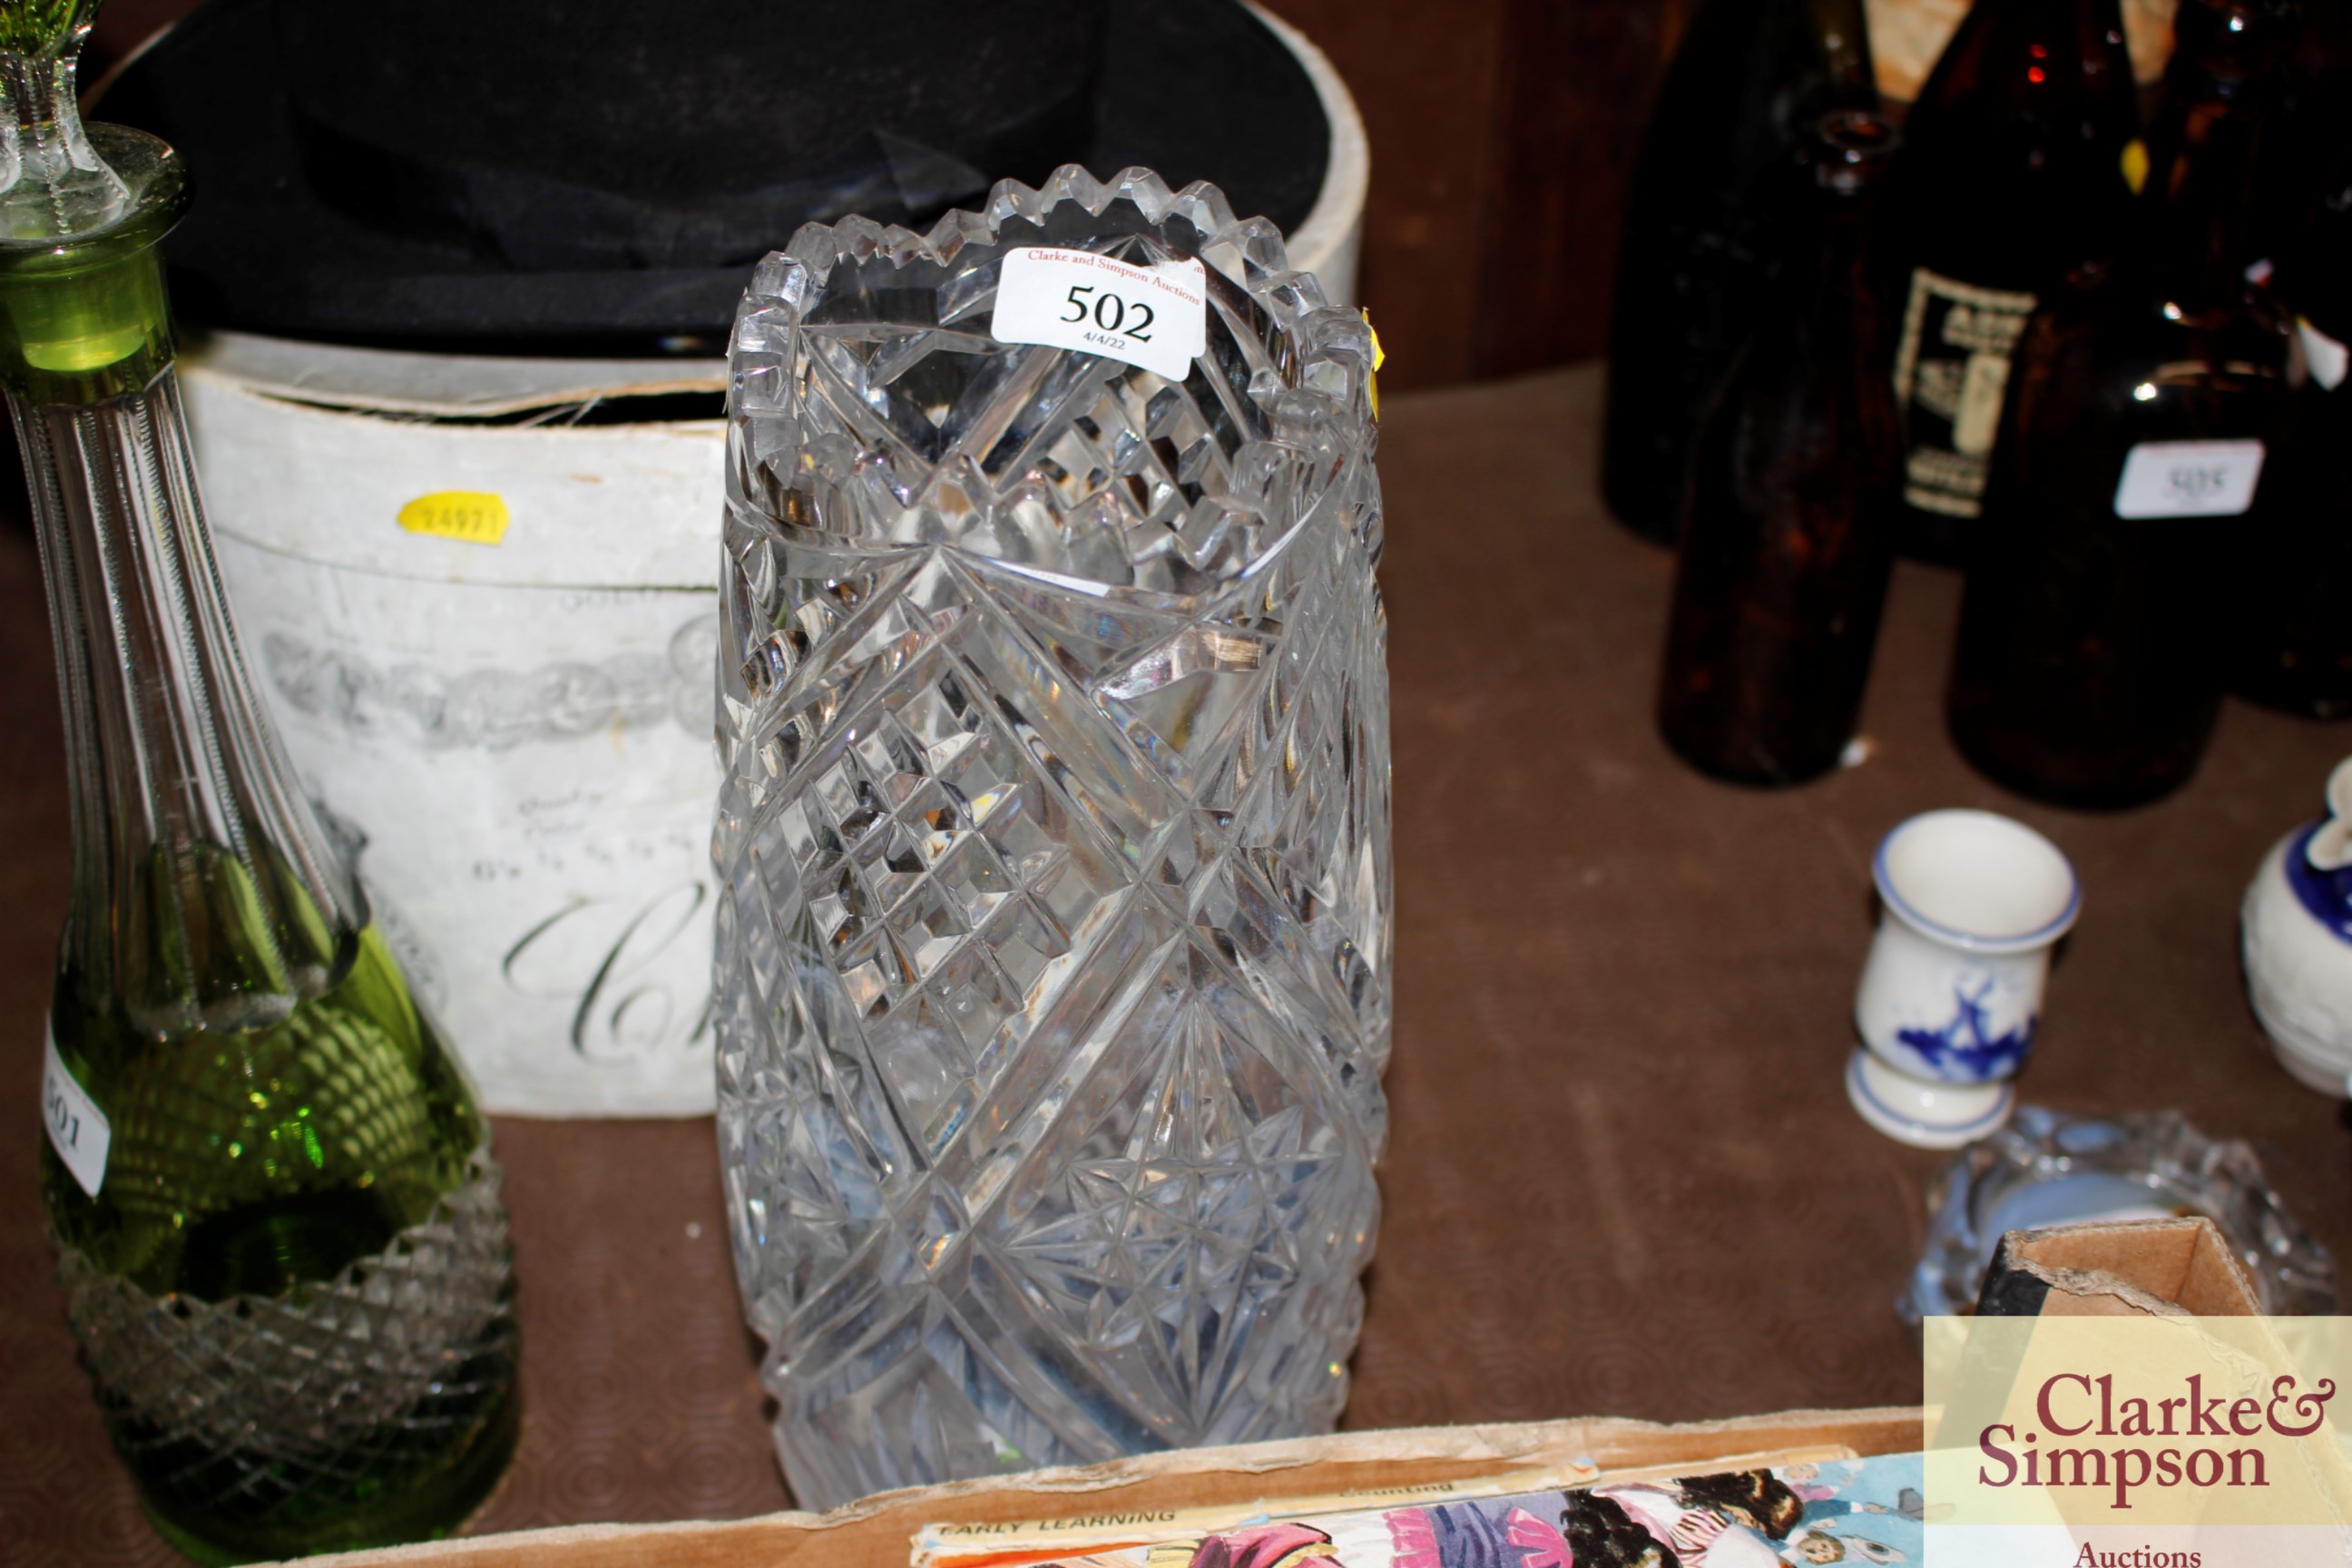 A heavy cut glass vase